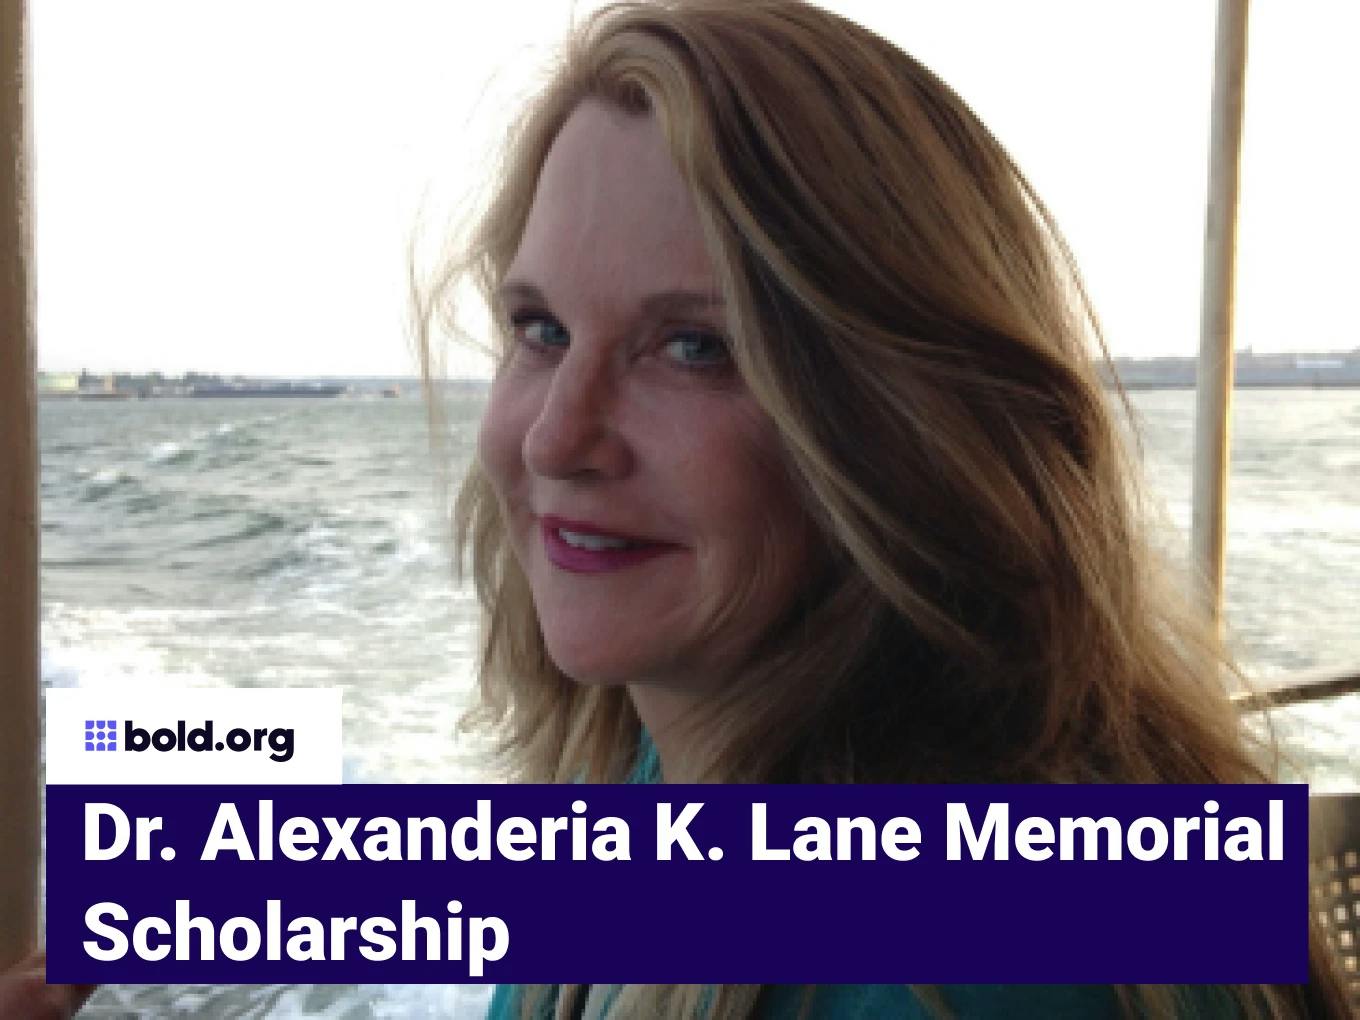 Dr. Alexanderia K. Lane Memorial Scholarship